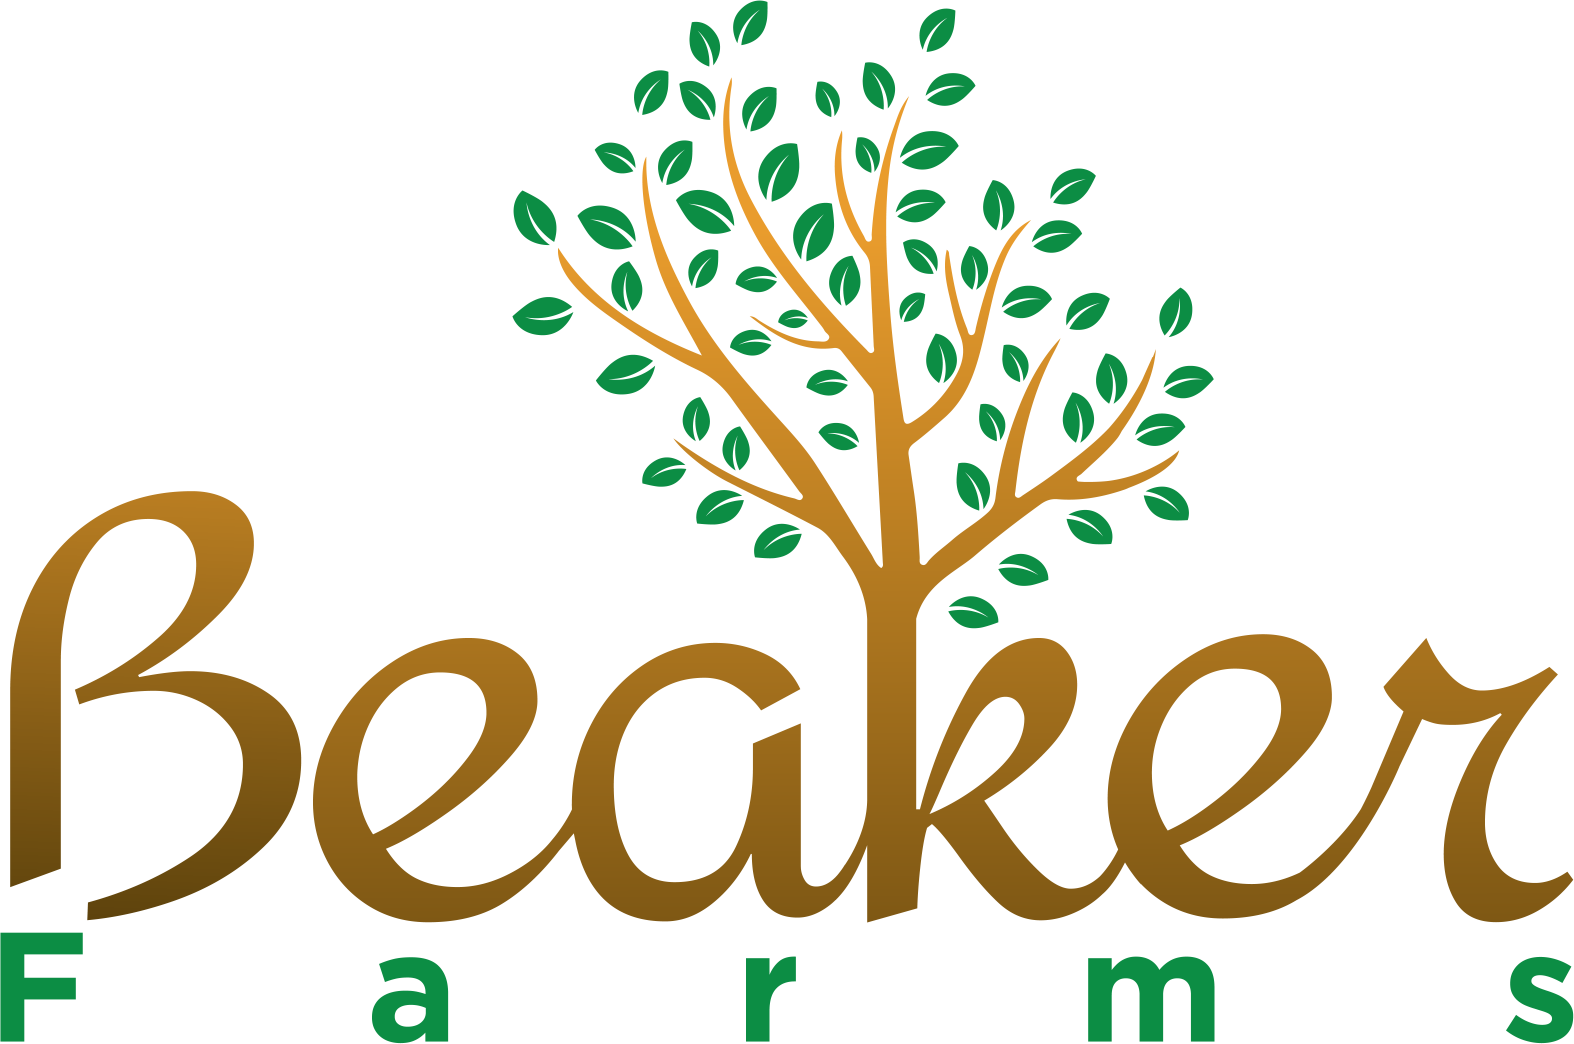 Beaker Farms Limited 